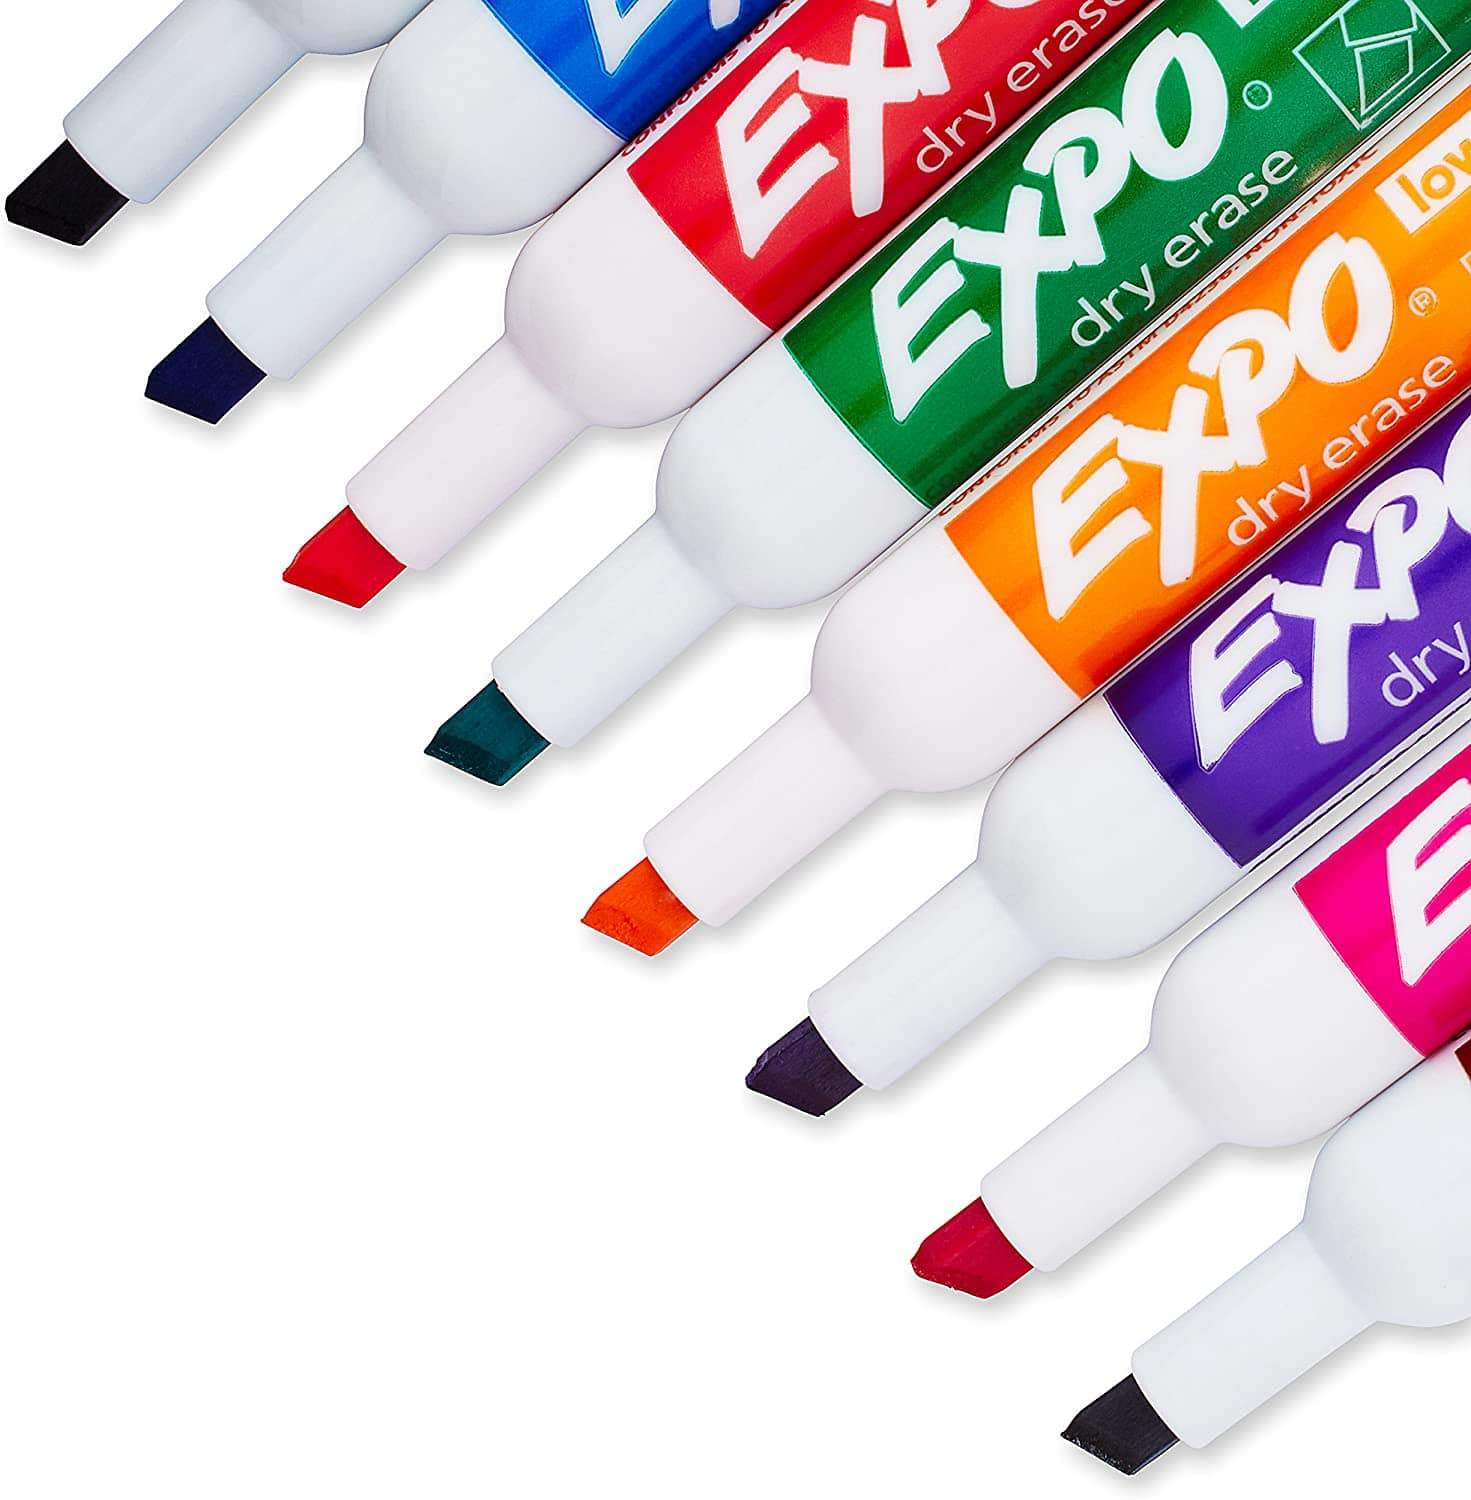 Bold Liquid Chalk Markers - Dry Erase Marker Pens Kazakhstan